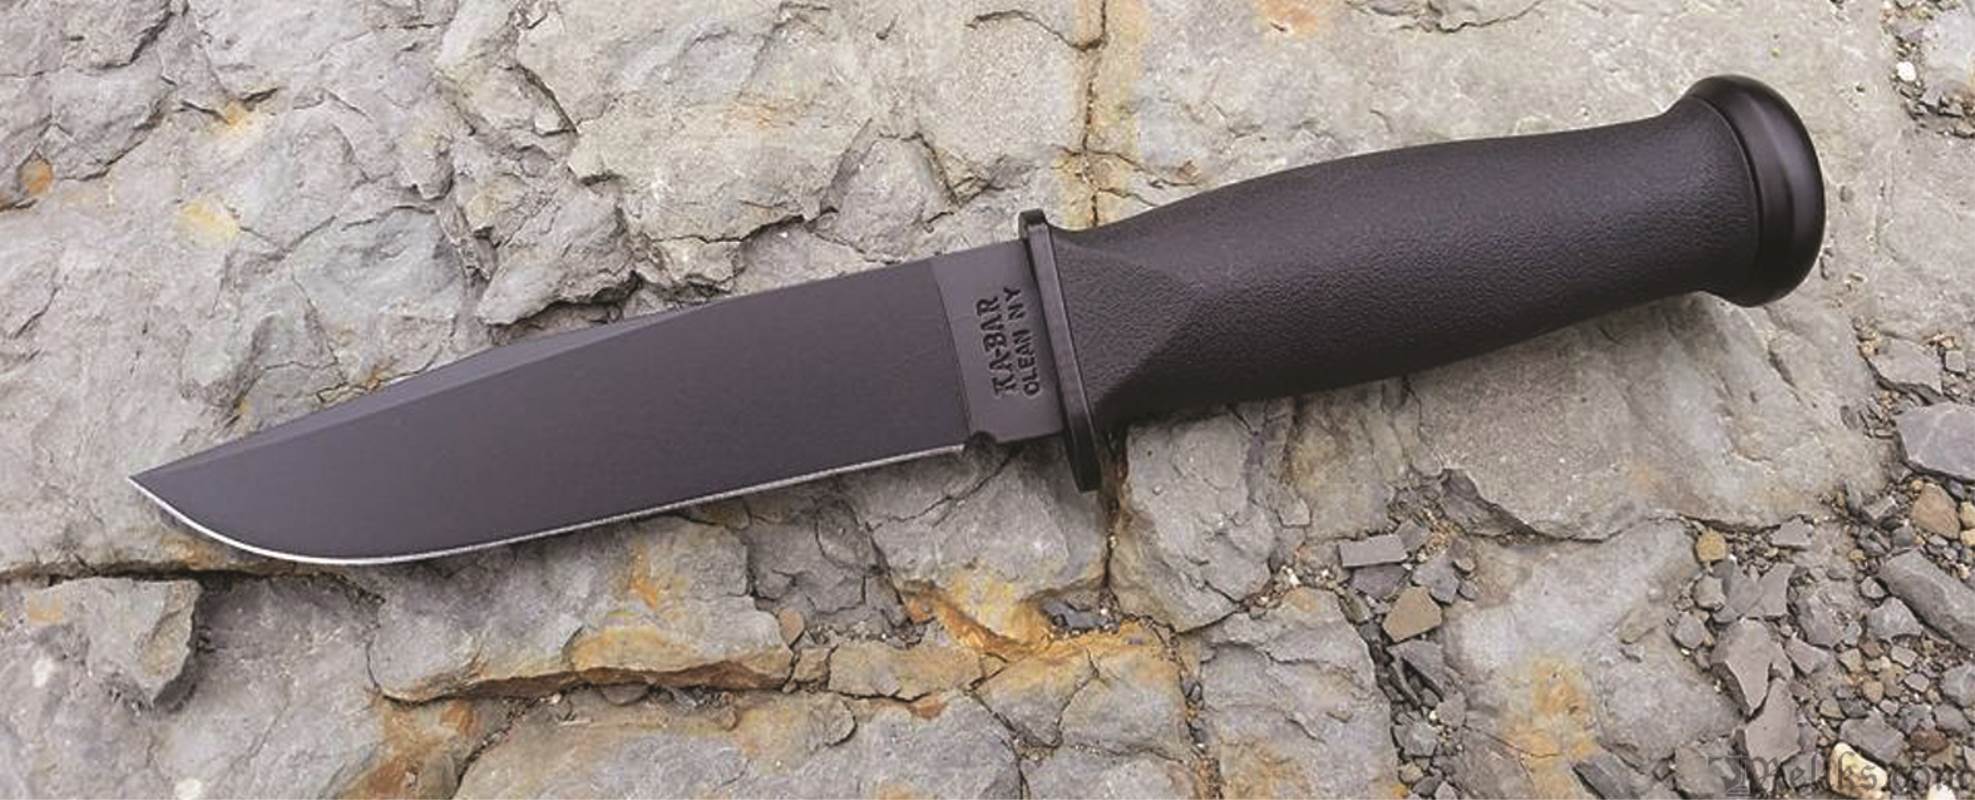 KaBar Mark 1 Knife